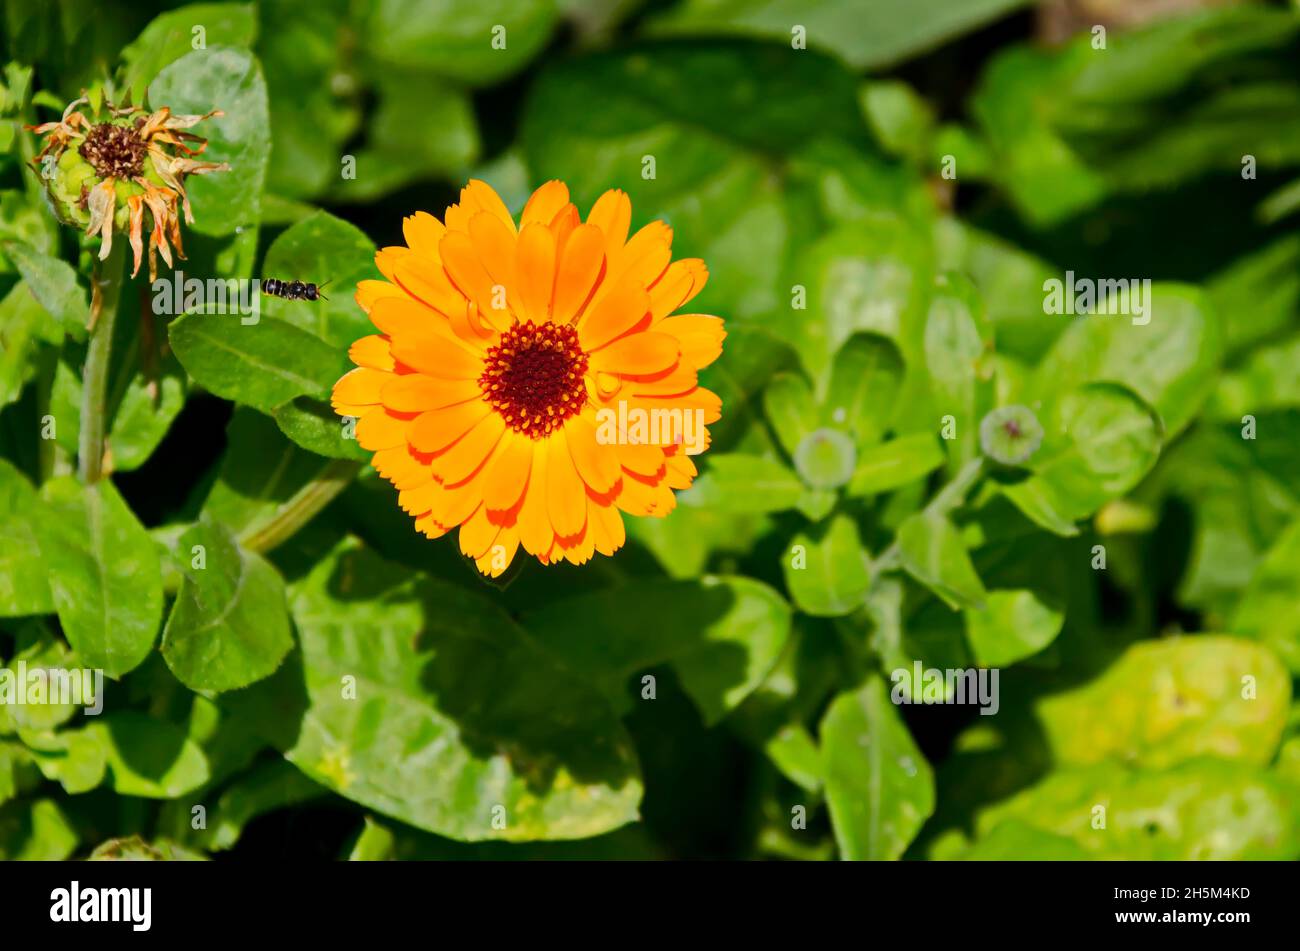 Marigold or calendula flower in the garden, Sofia, Bulgaria Stock Photo